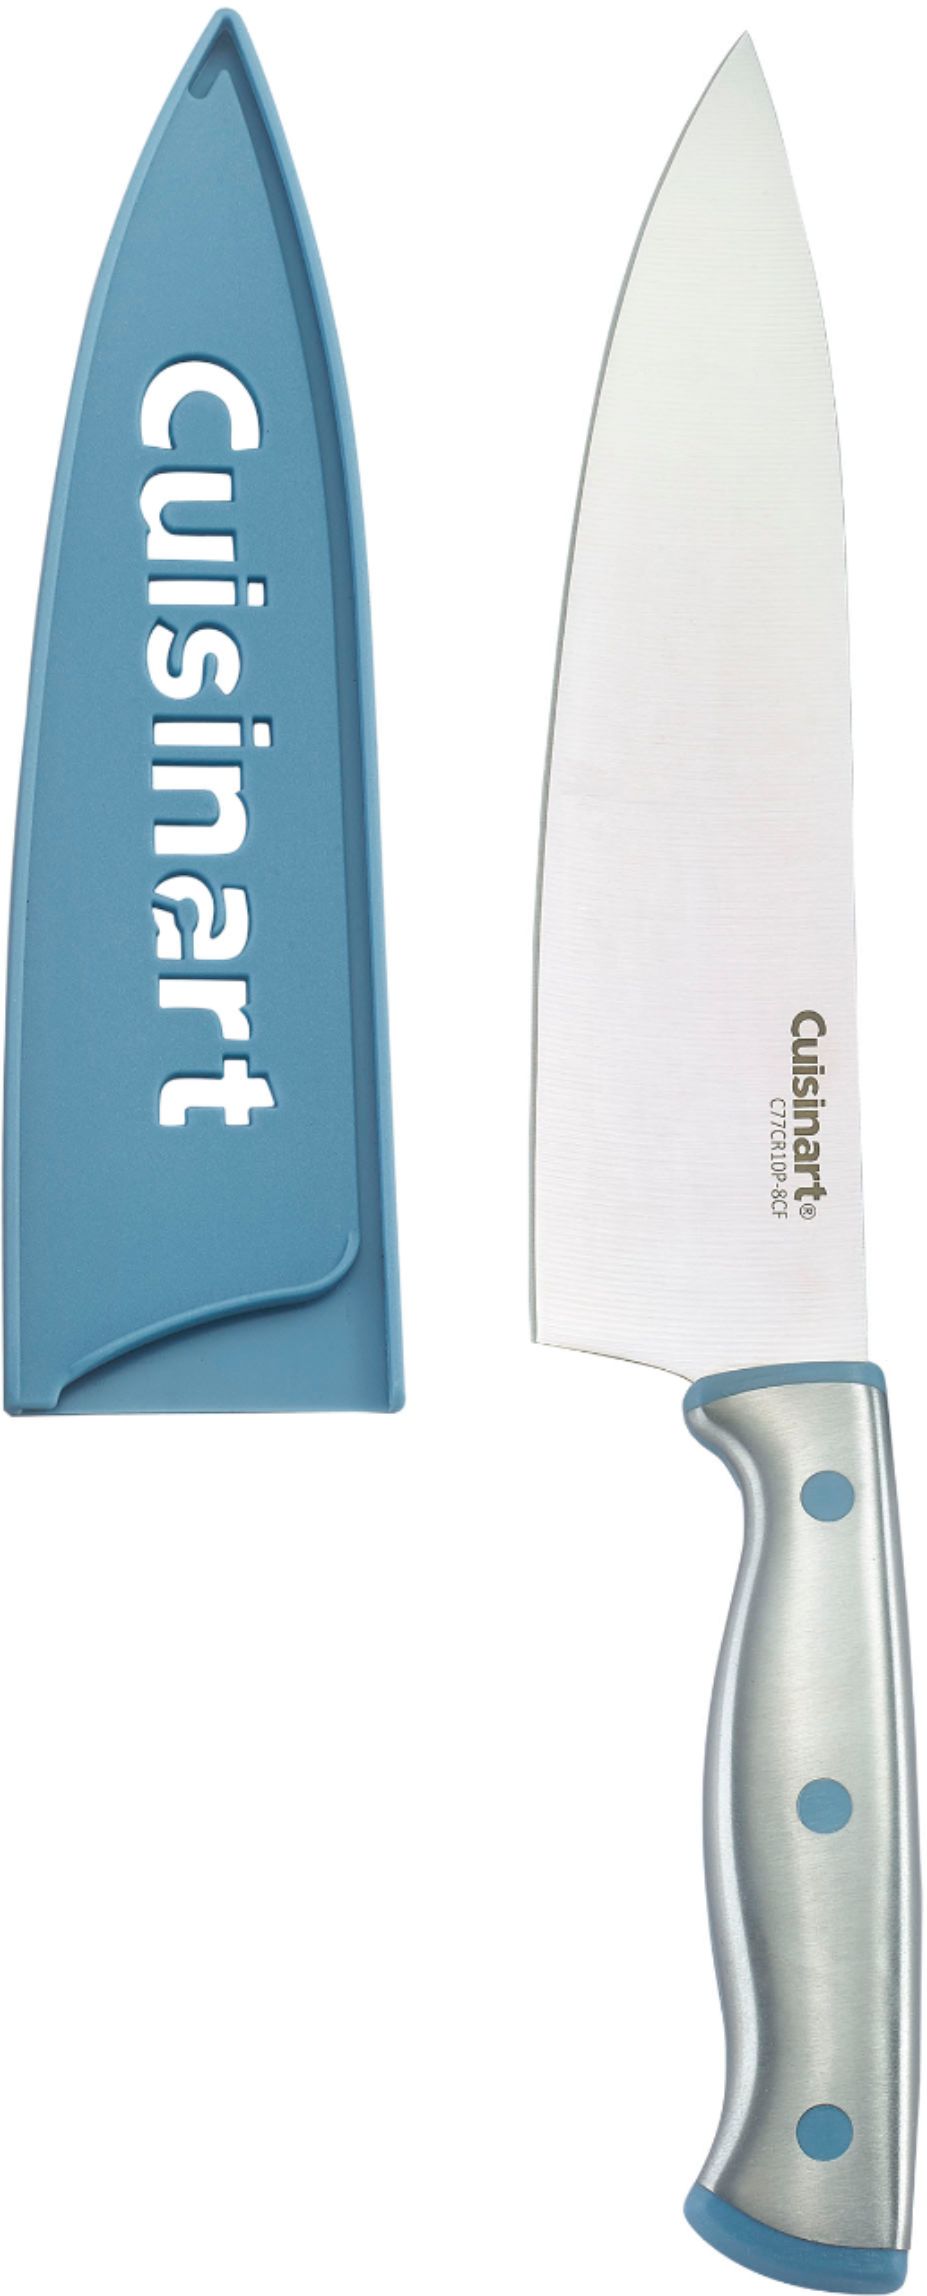 Colored Knife Sets - Best Buy